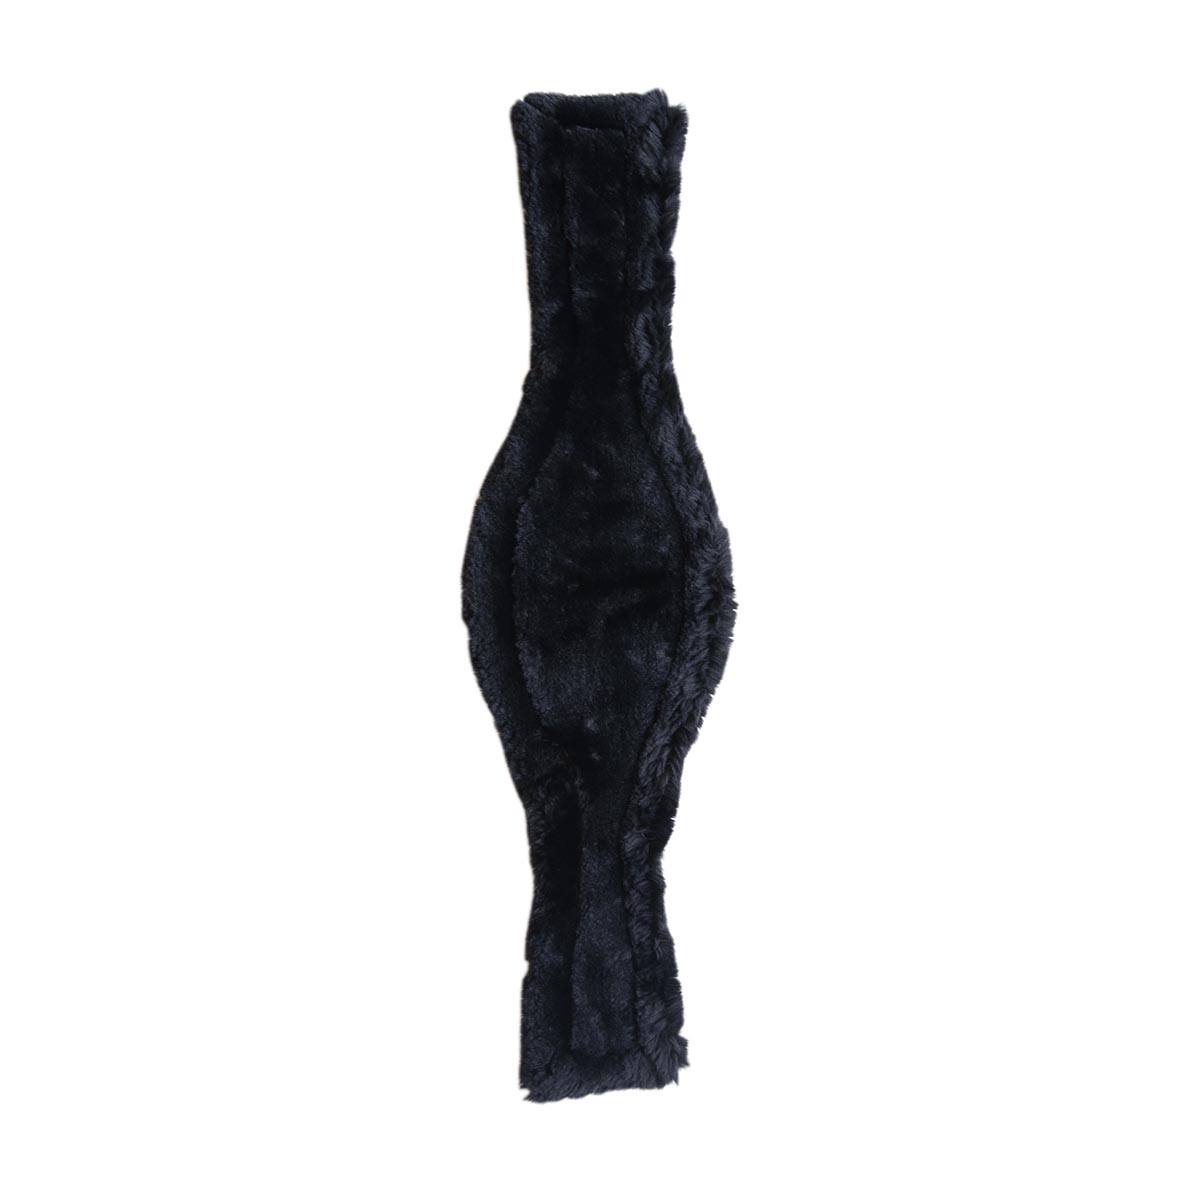 Singelhoes Kentucky Anatomic Zwart, 120 CM in zwart